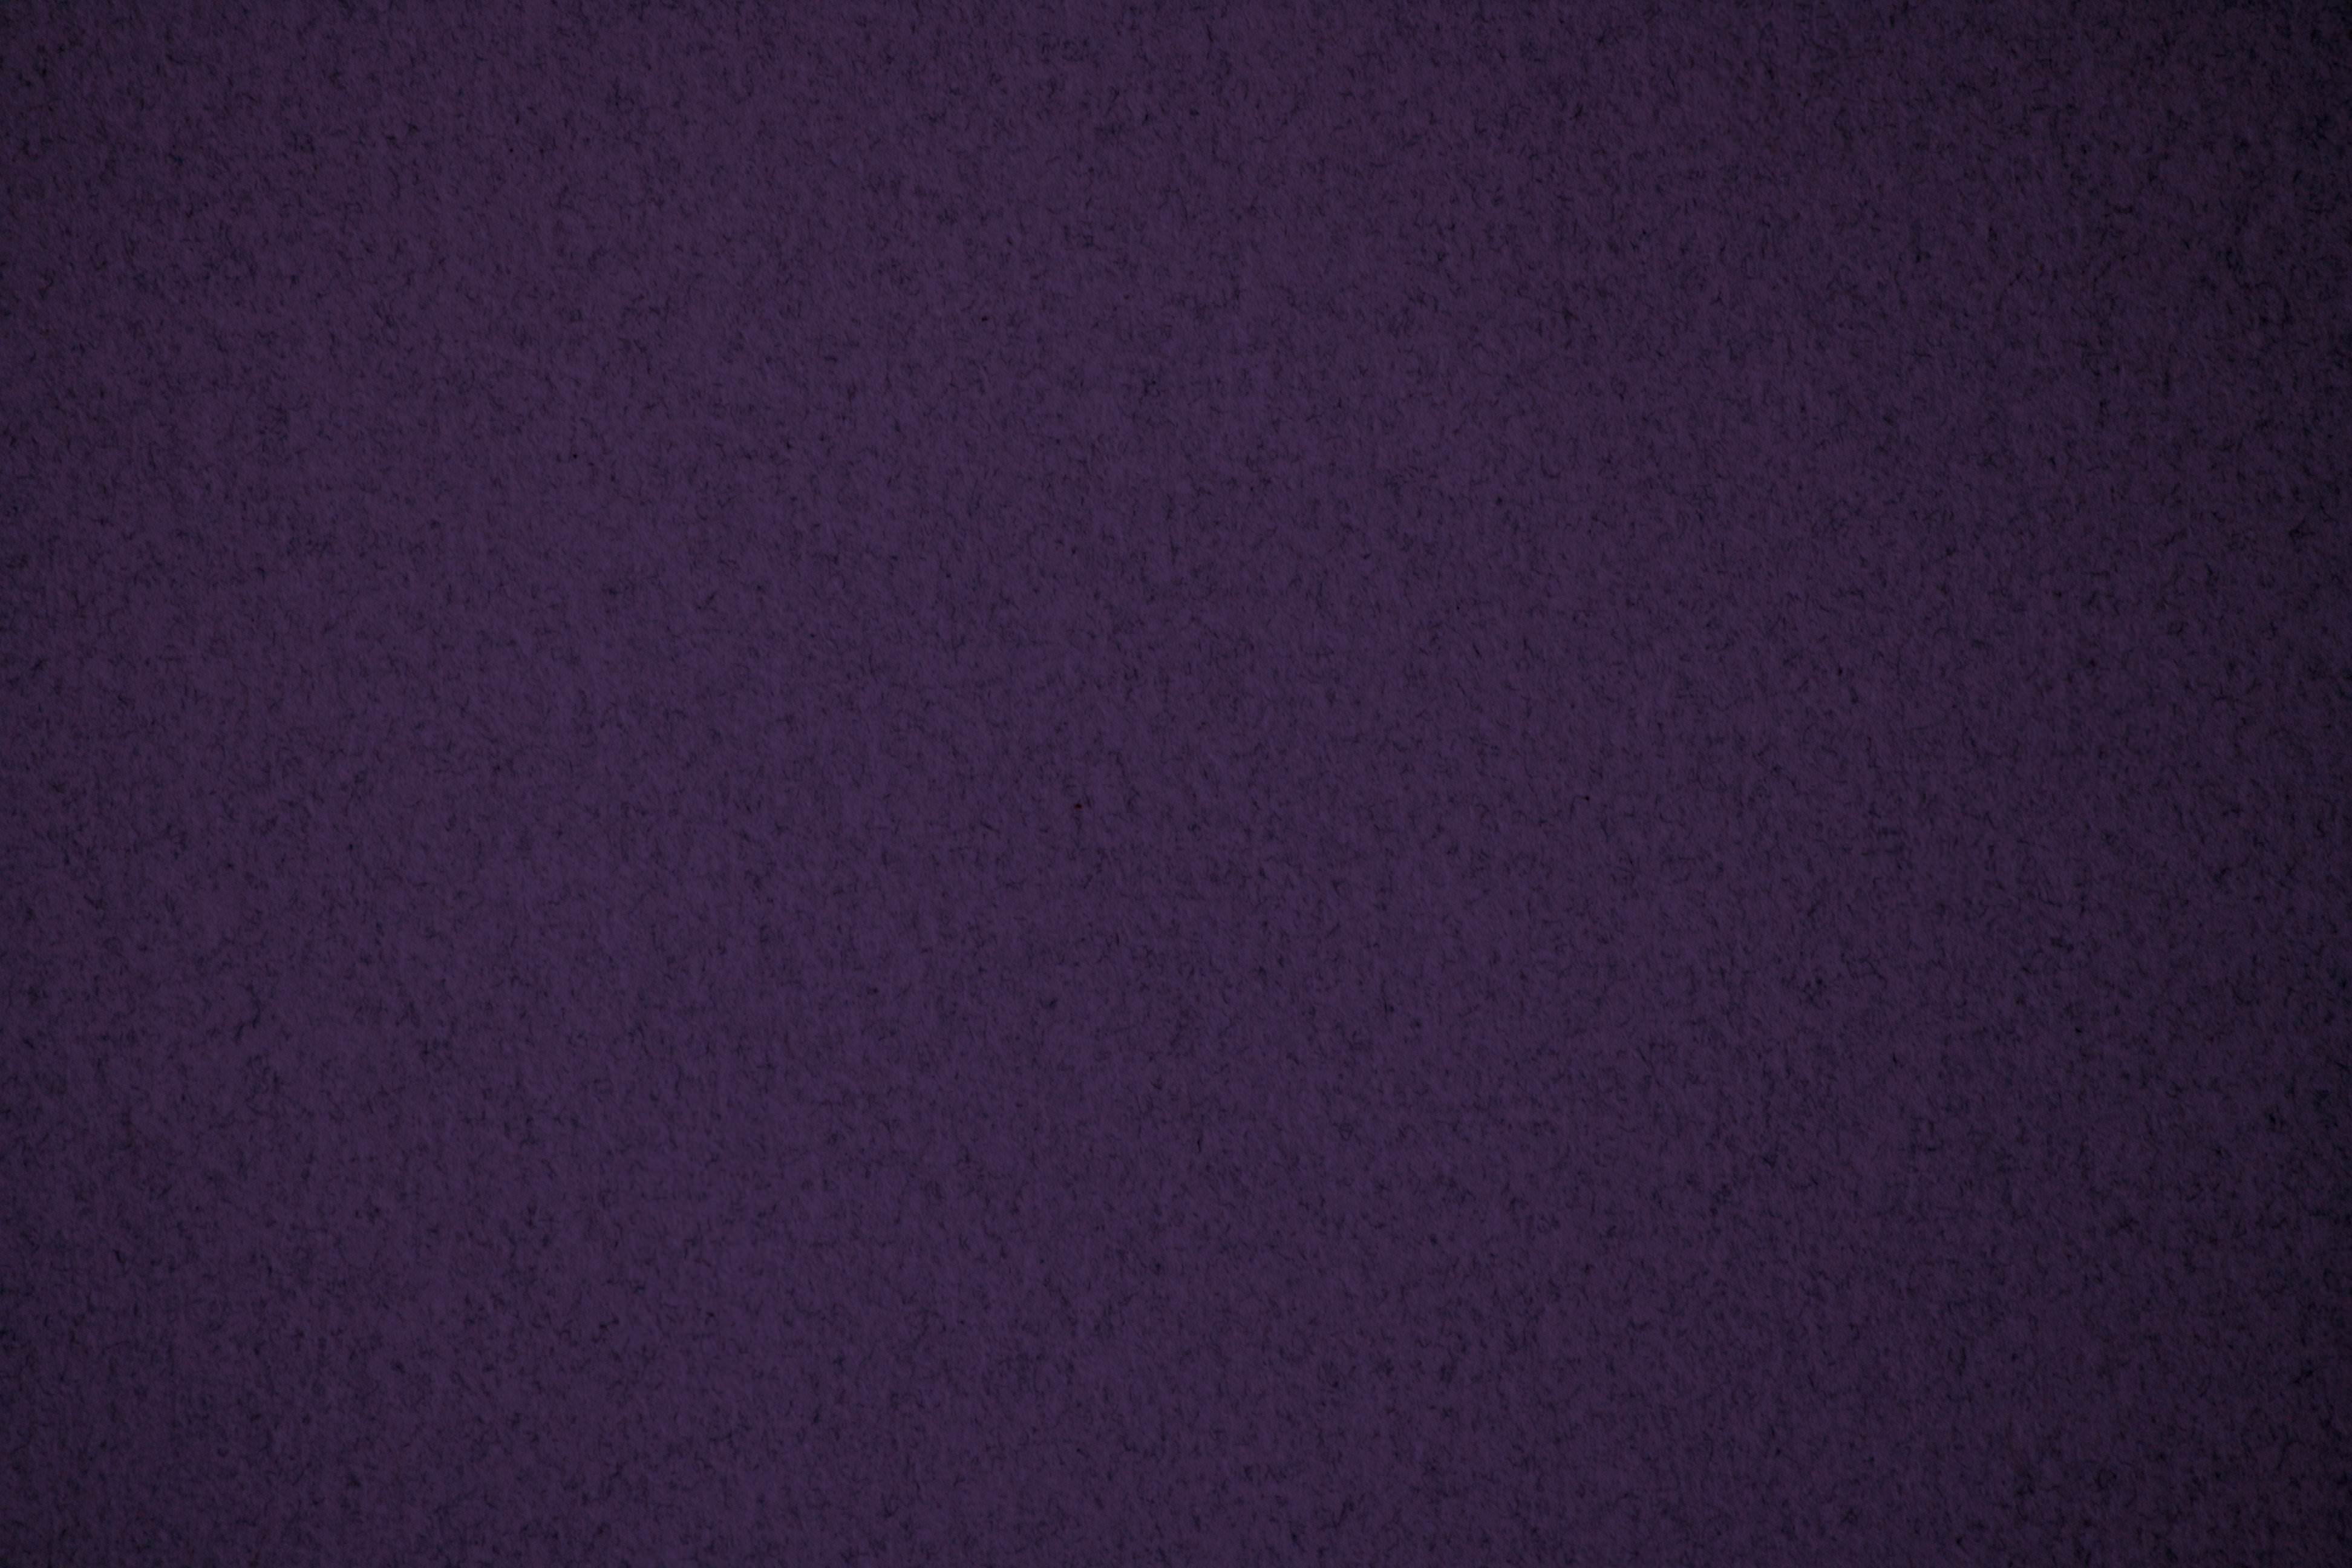 Background Image Dark Purple